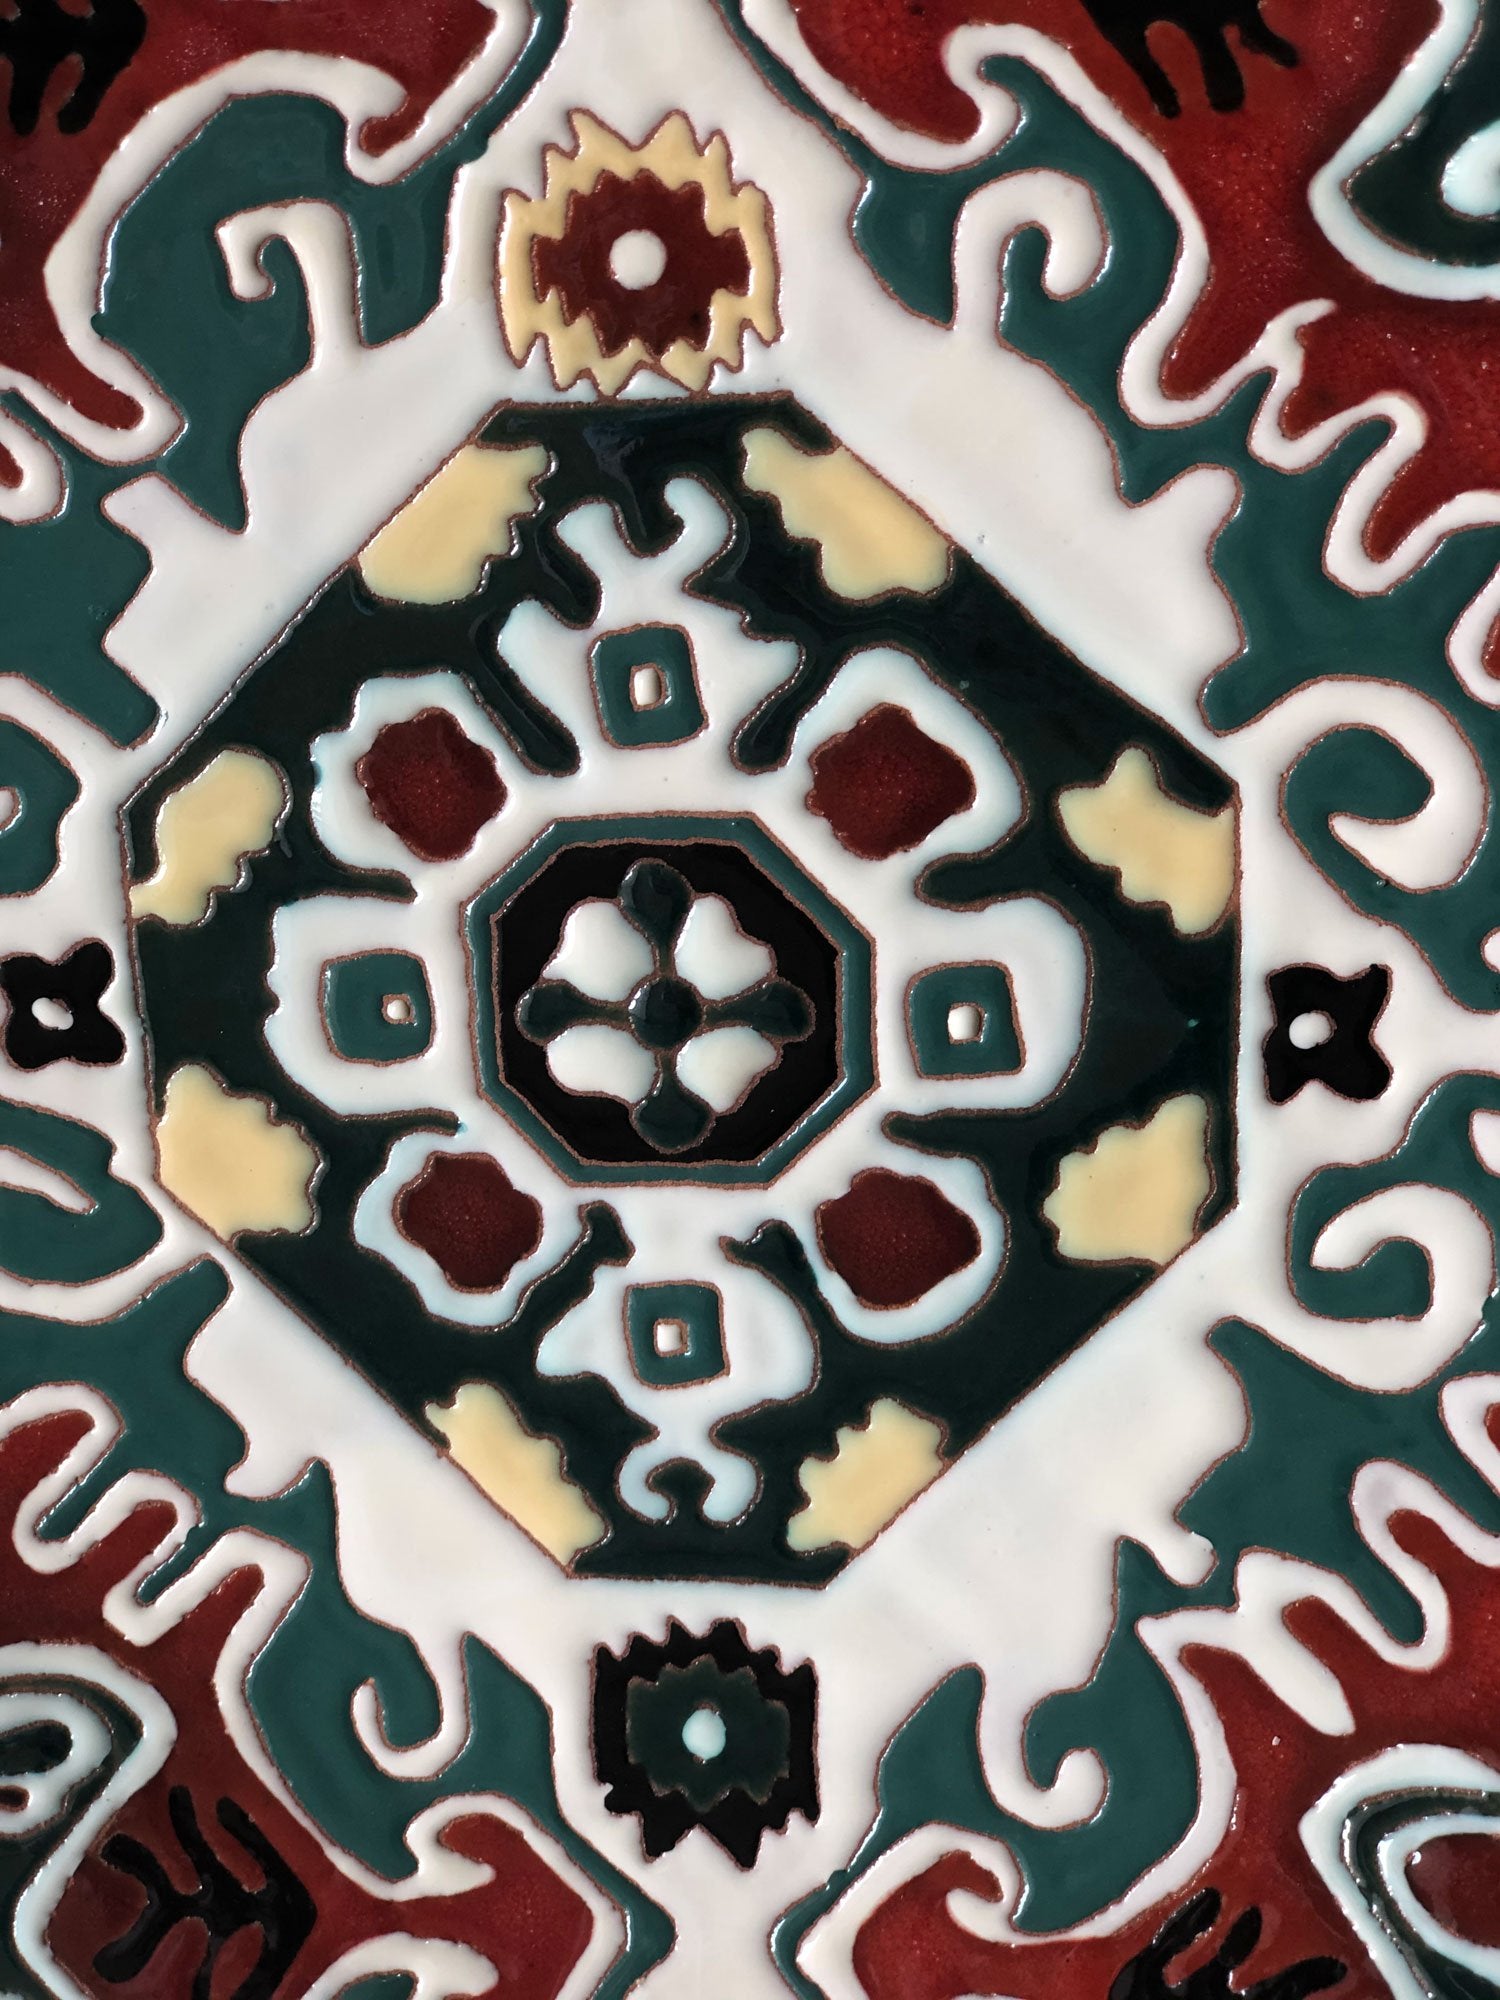 Ceramic Plate with Armenian Carpet Ornaments - Artsakh